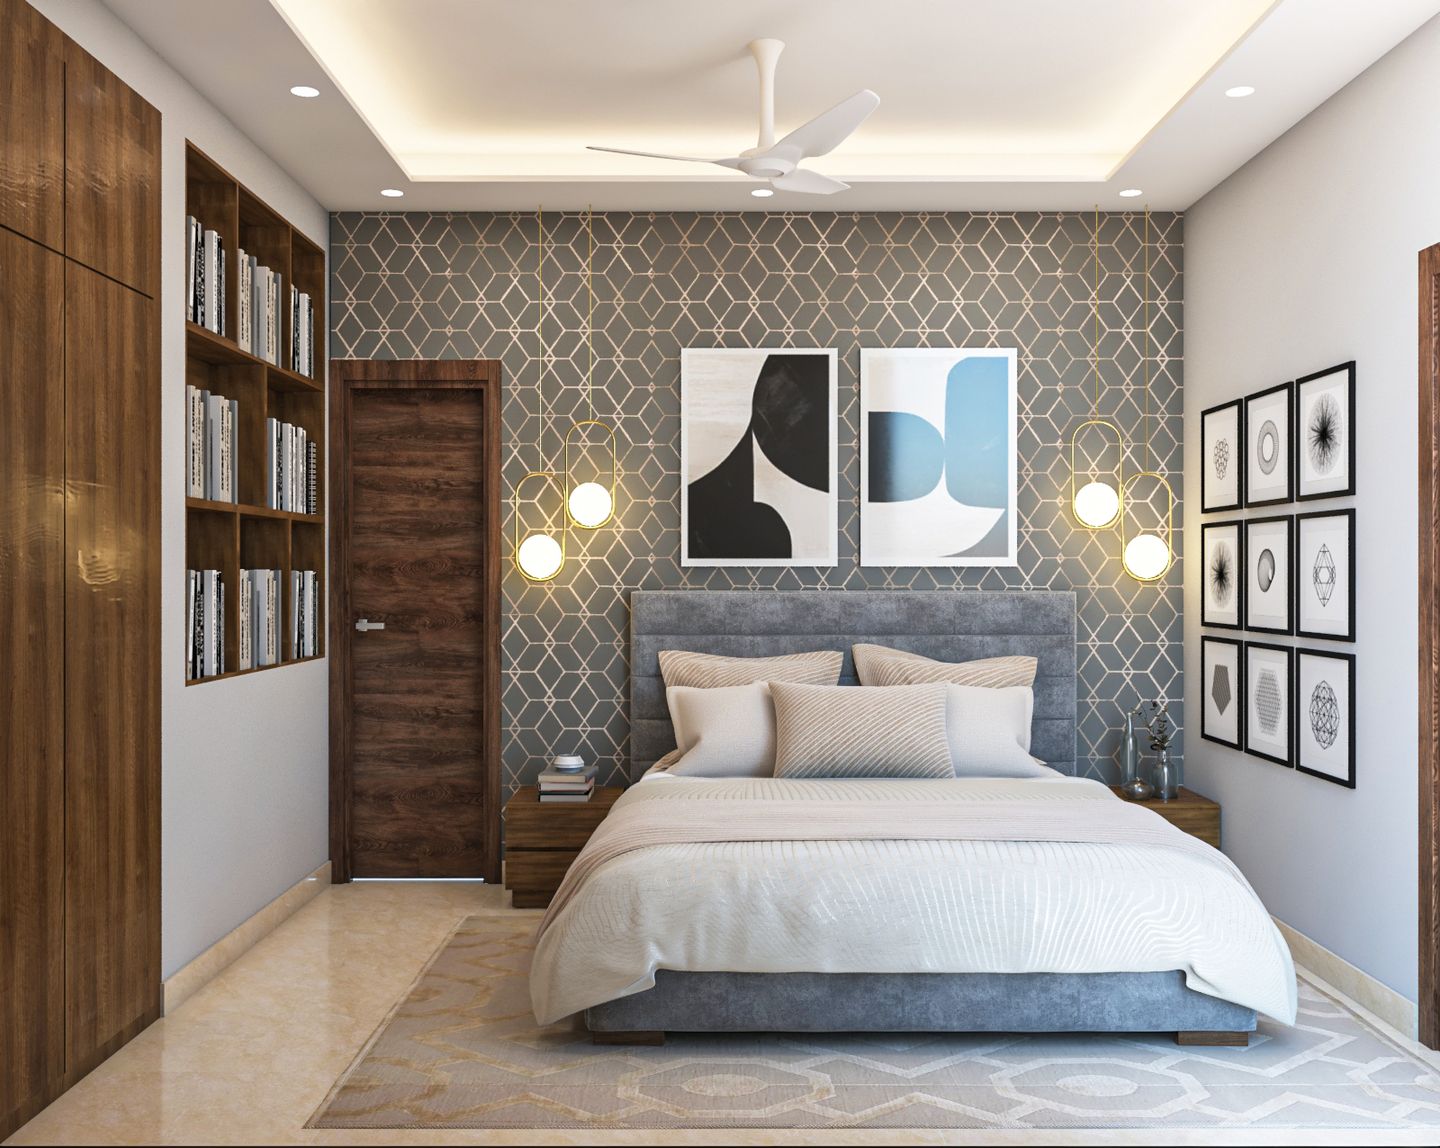 Geometrical Wallpaper Design For Bedrooms - Livspace